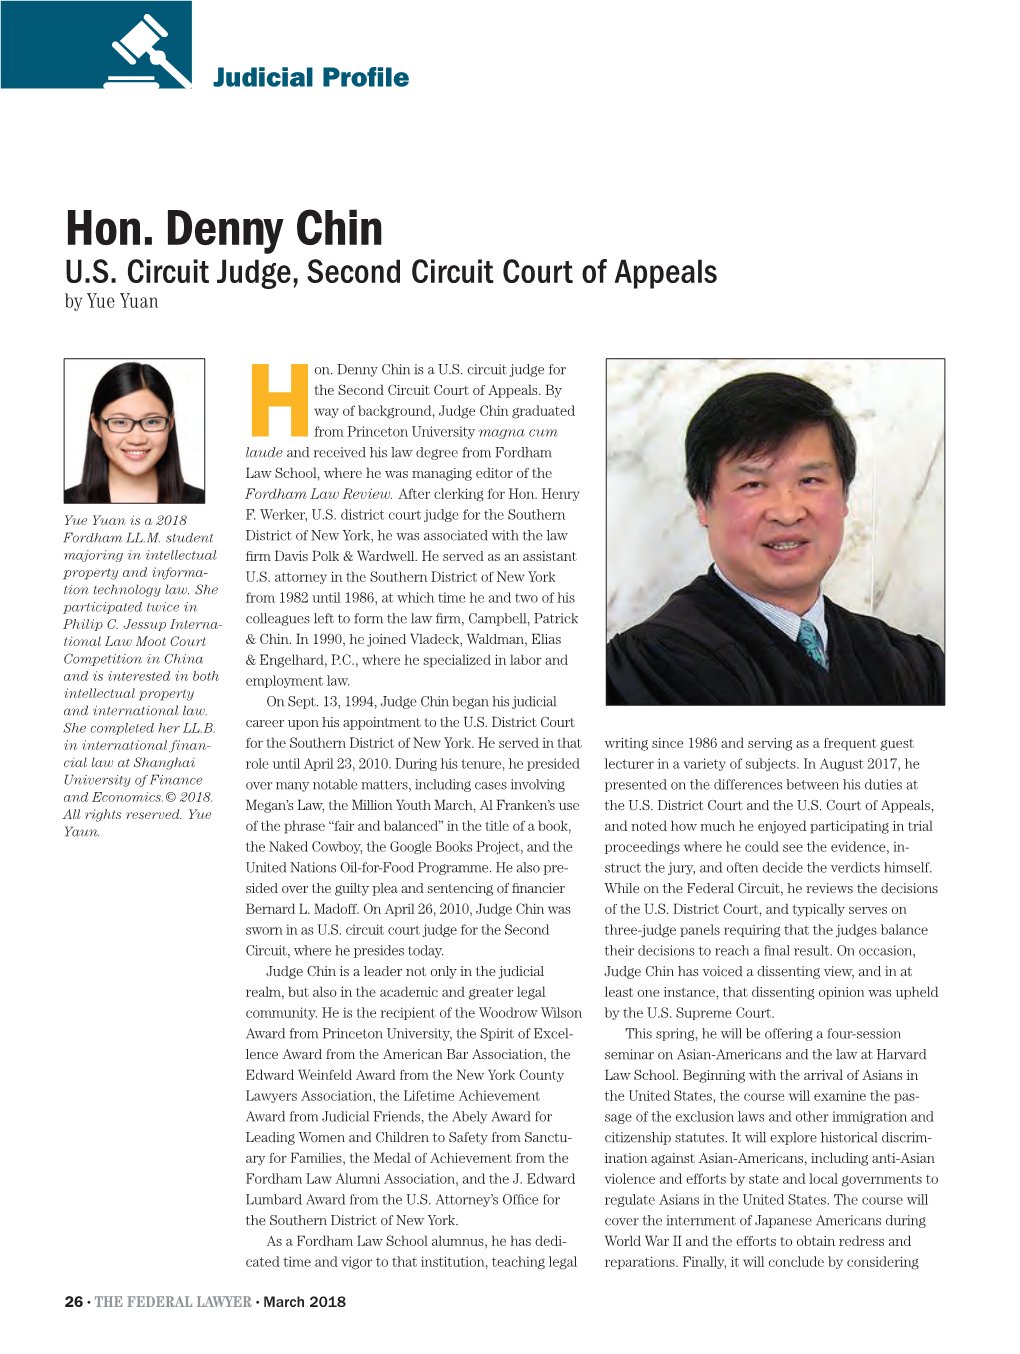 Hon. Denny Chin U.S